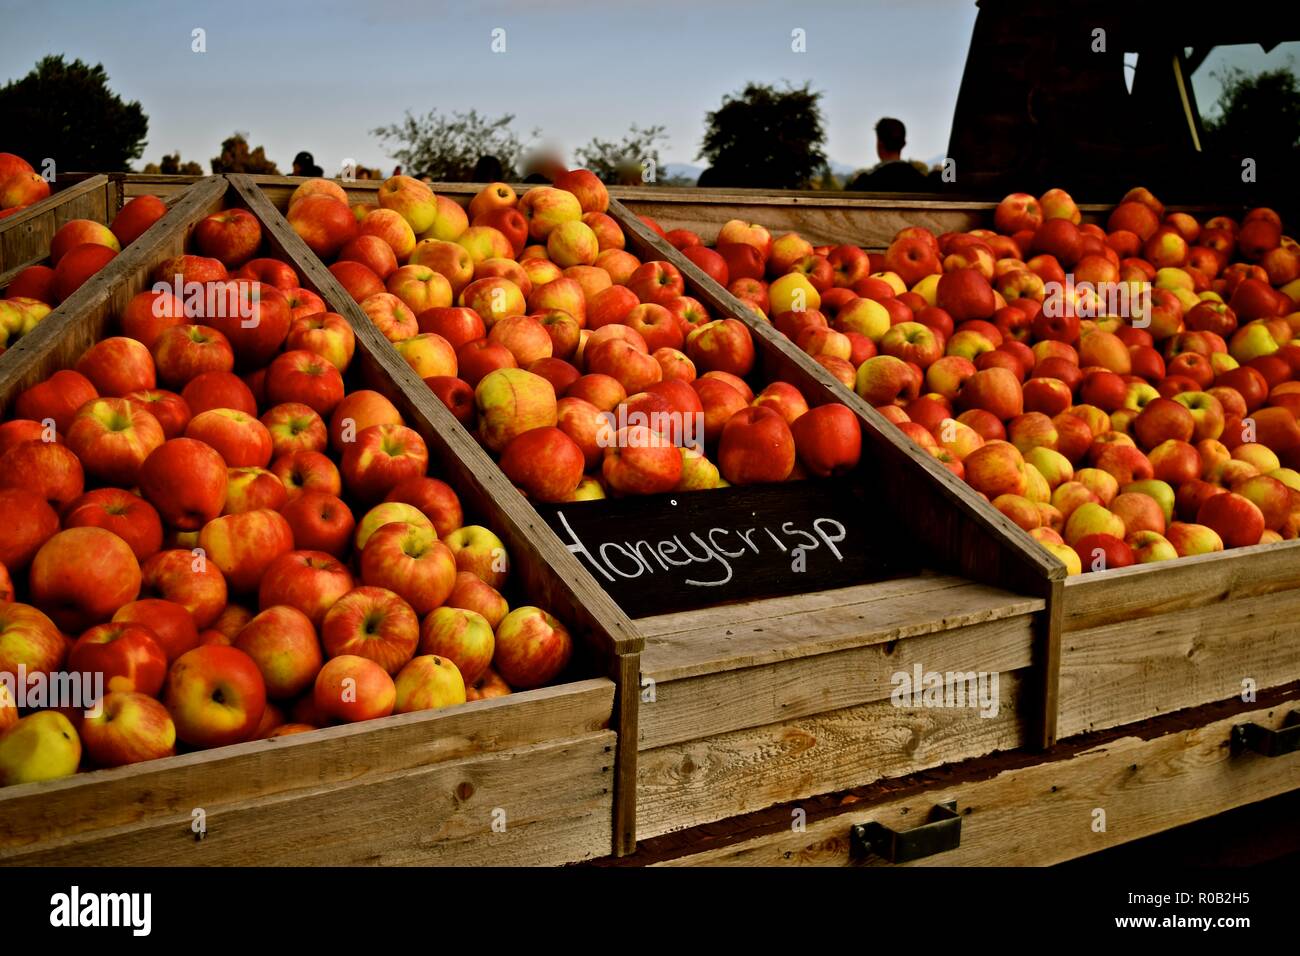 Harvest Fresh Organic Red Apples Black Stock Photo 2287719477